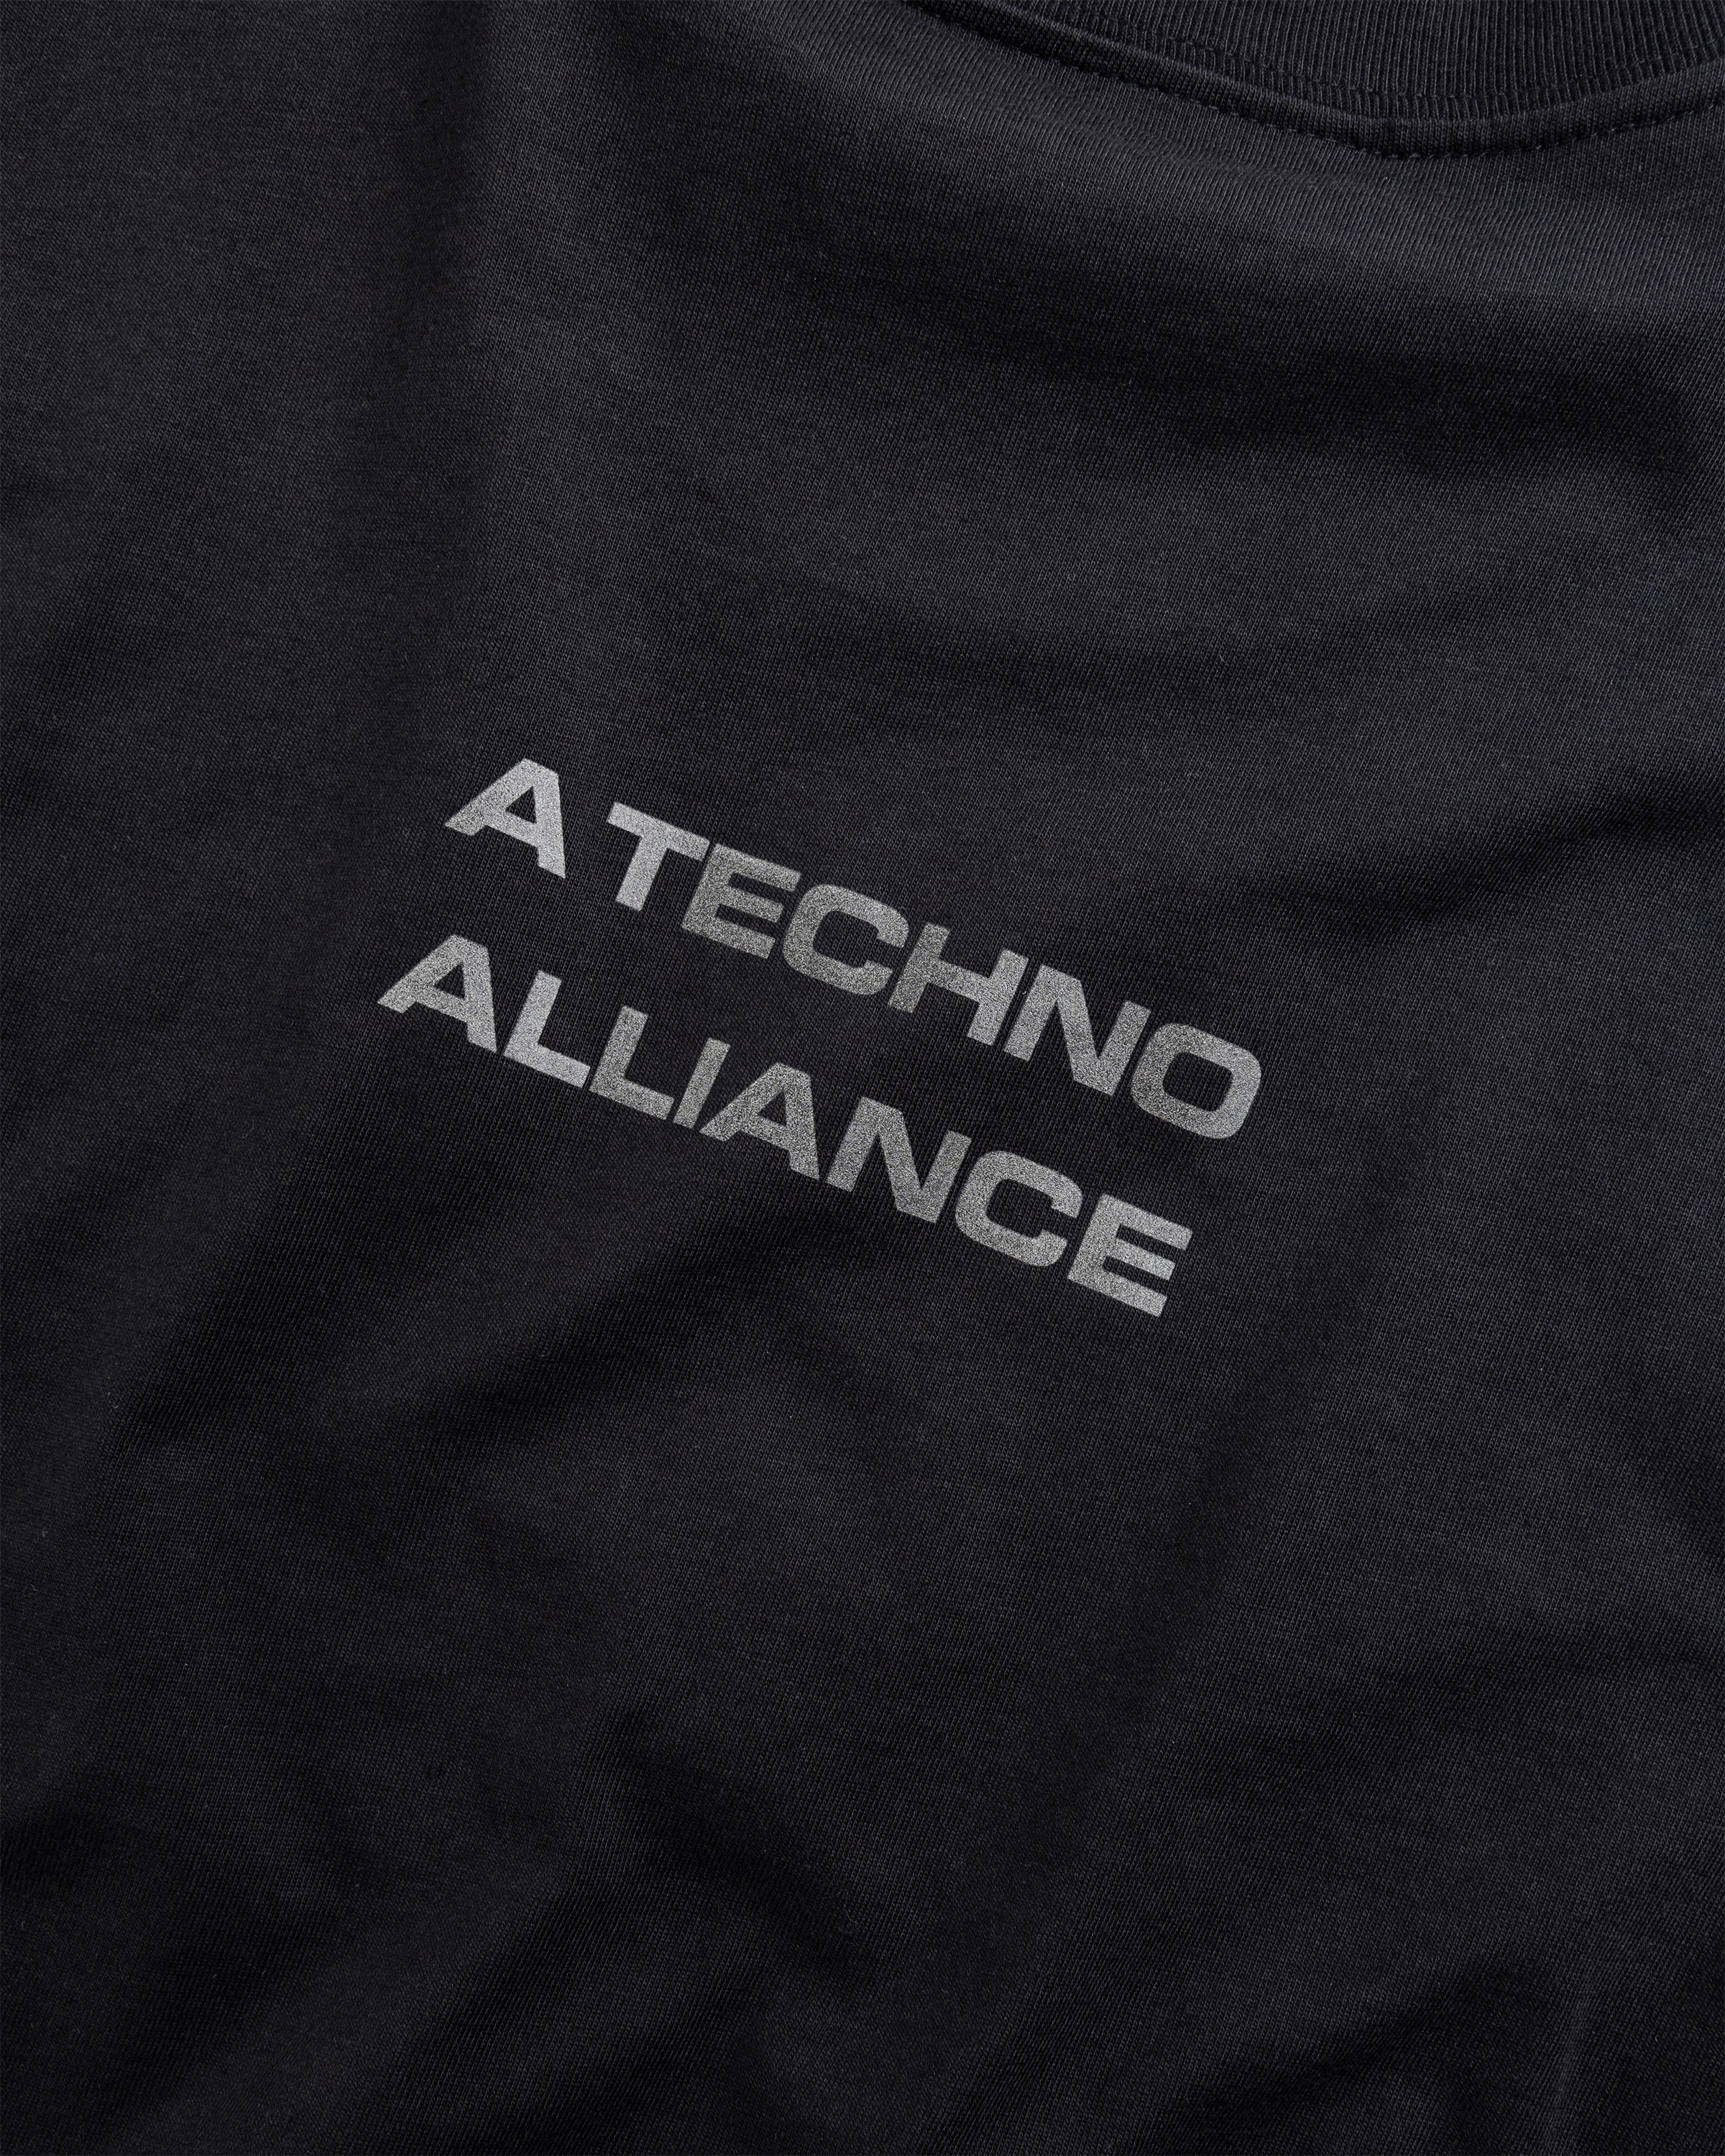 Carhartt WIP x Tresor – Techno Alliance S/S T-Shirt Black/Dark Grey Reflective - Tops - Black - Image 7